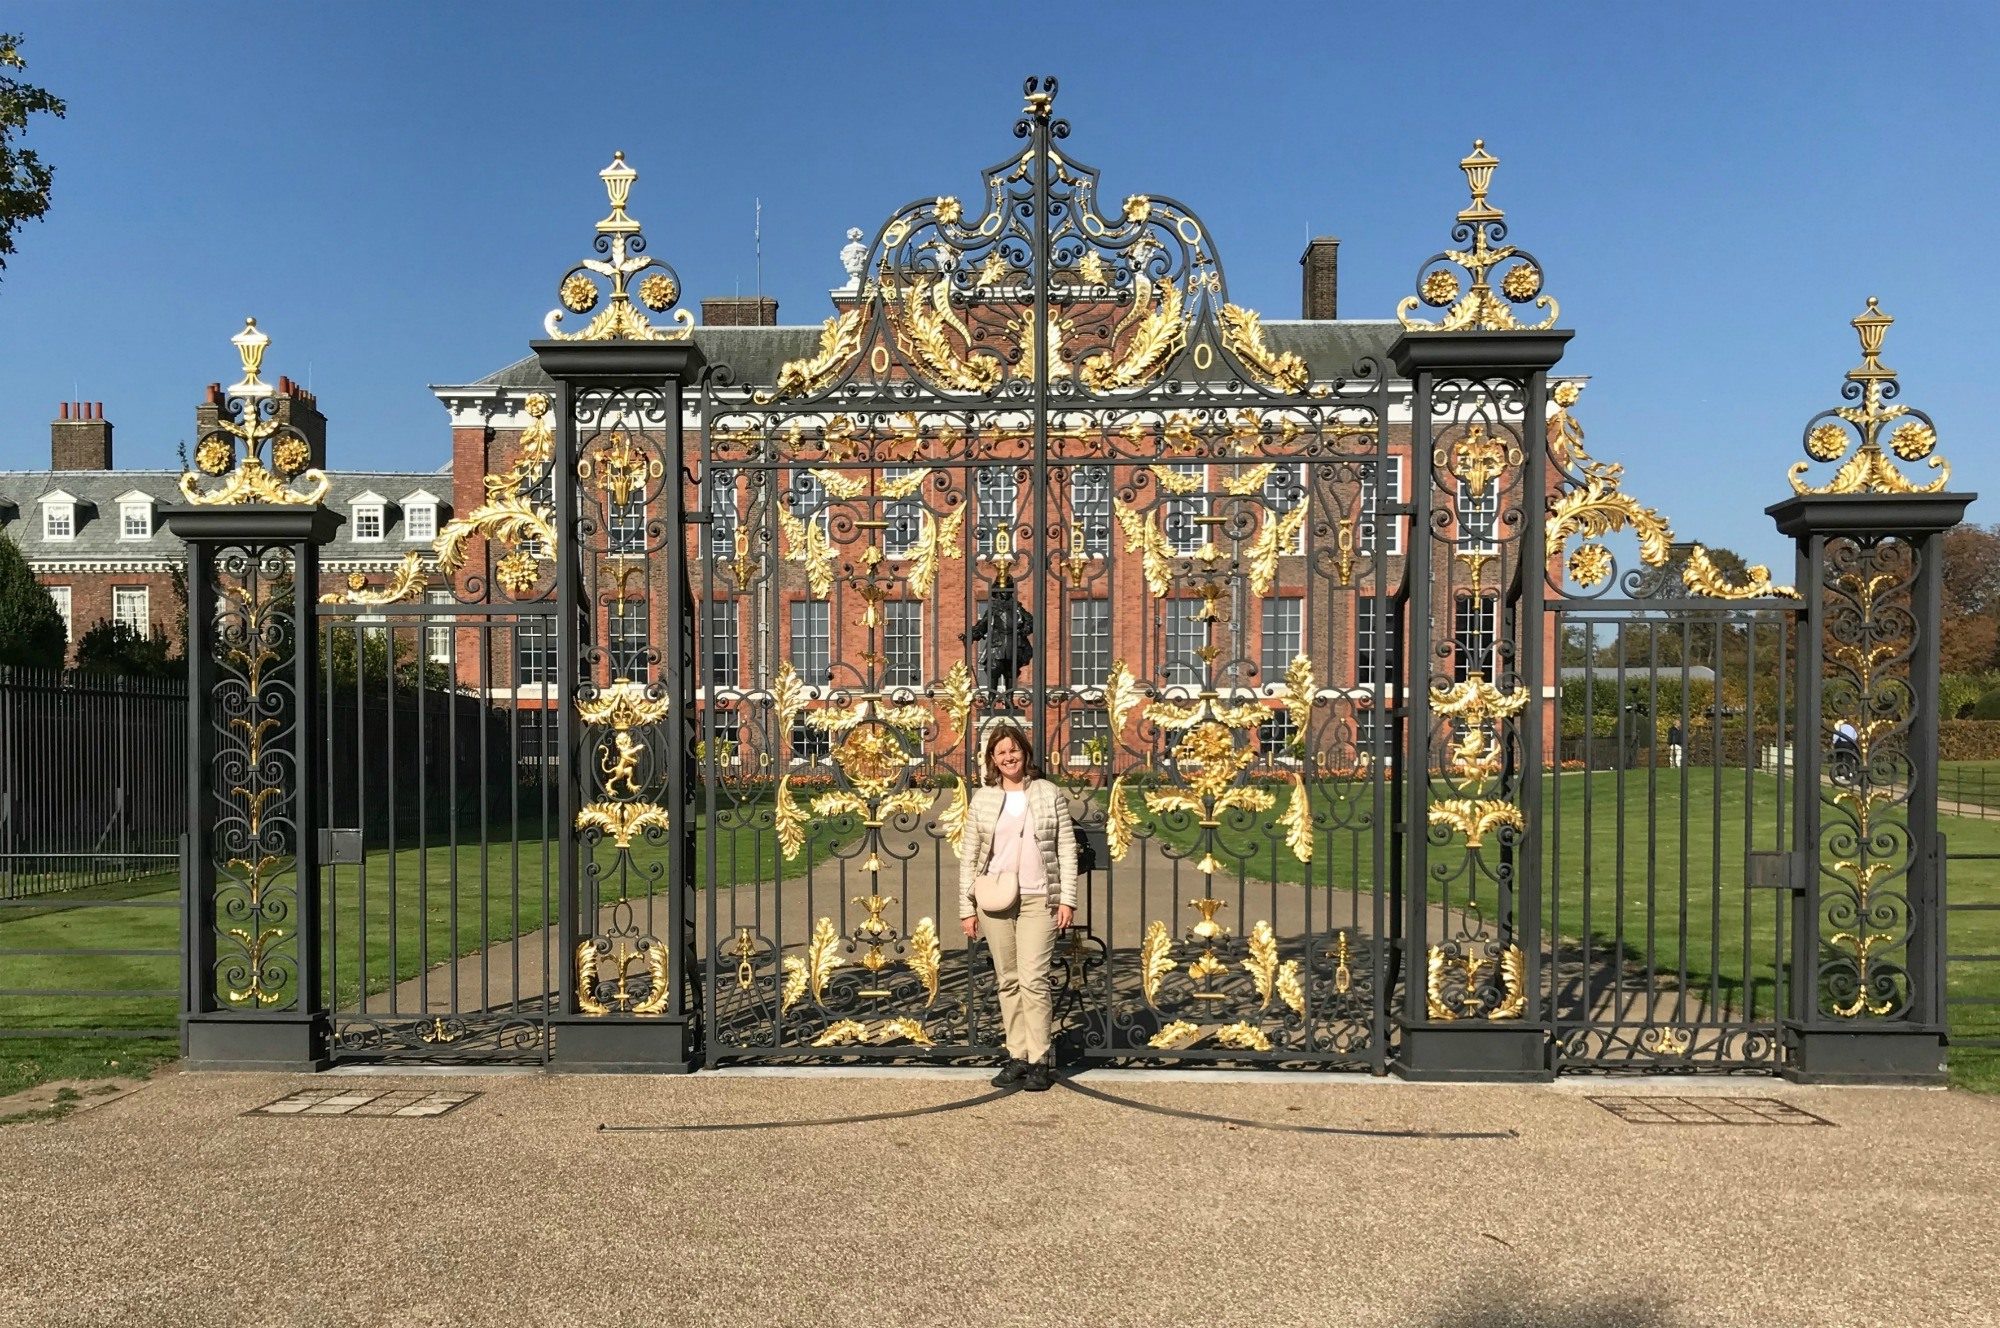 Wrought Iron gates of Kensington Palace, London